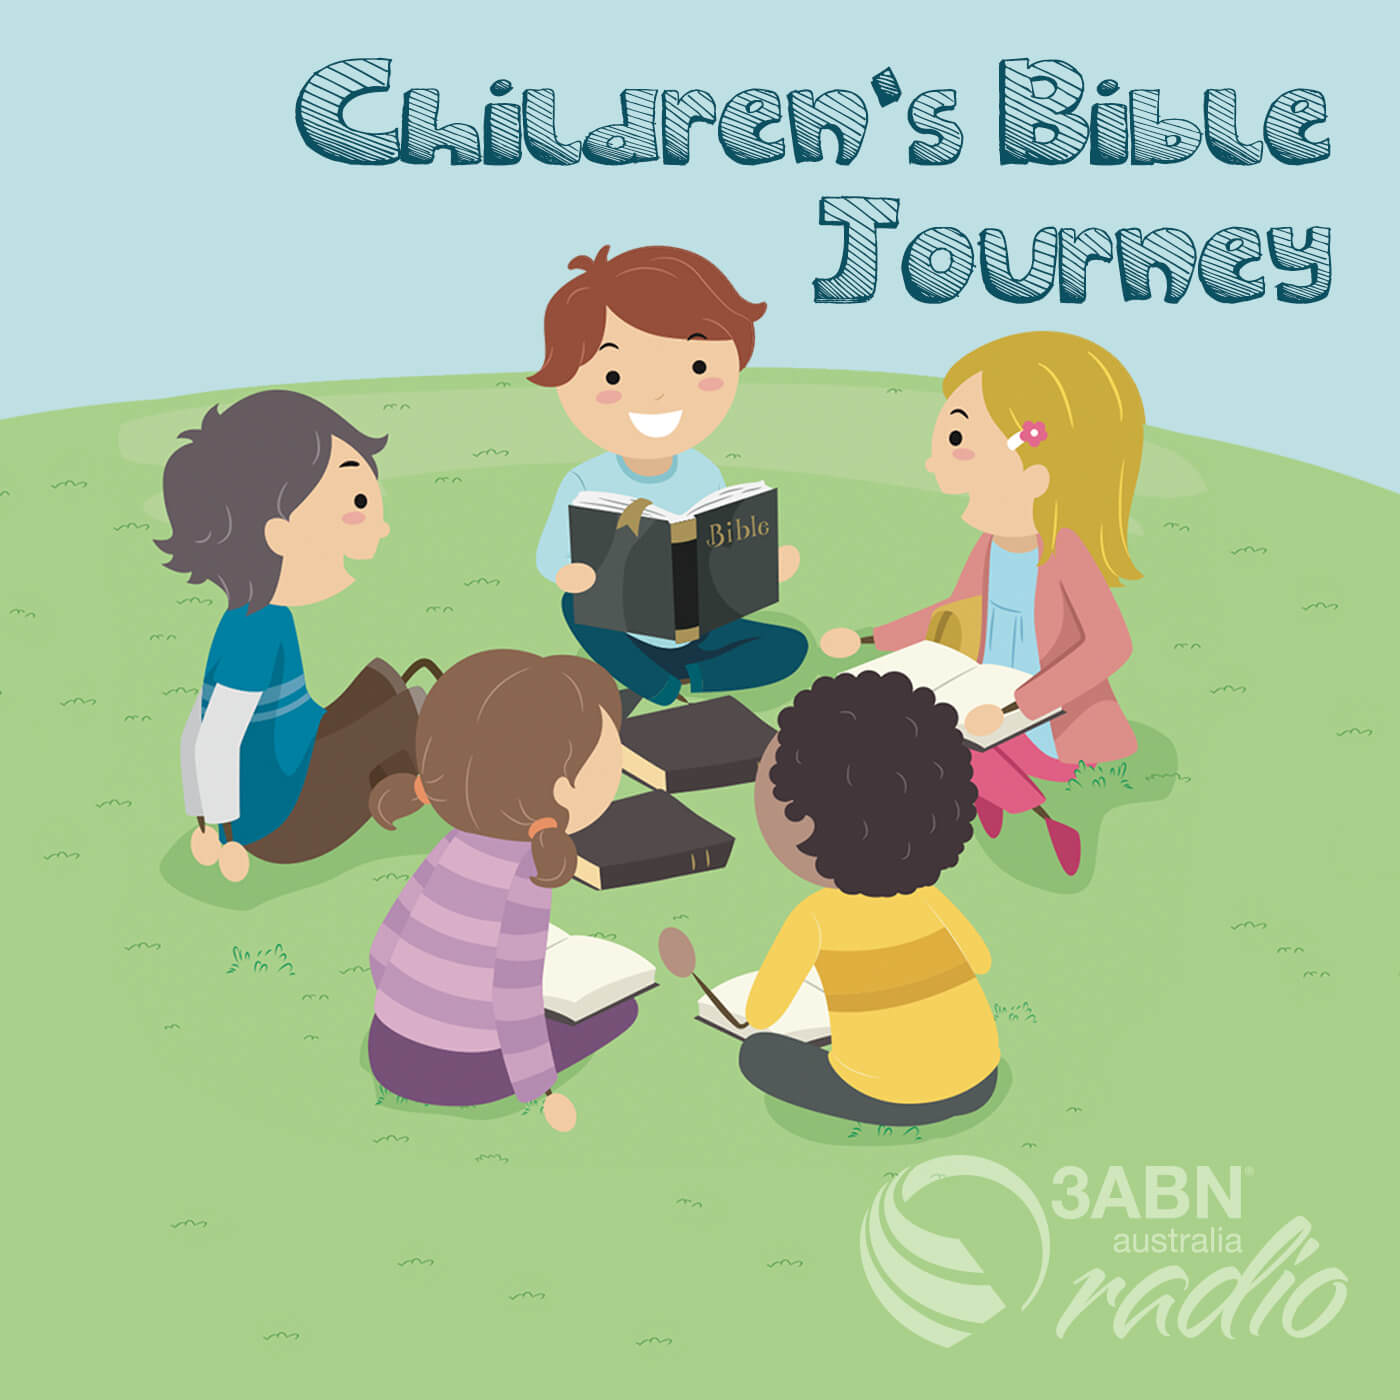 Children's Bible Journey - 2134